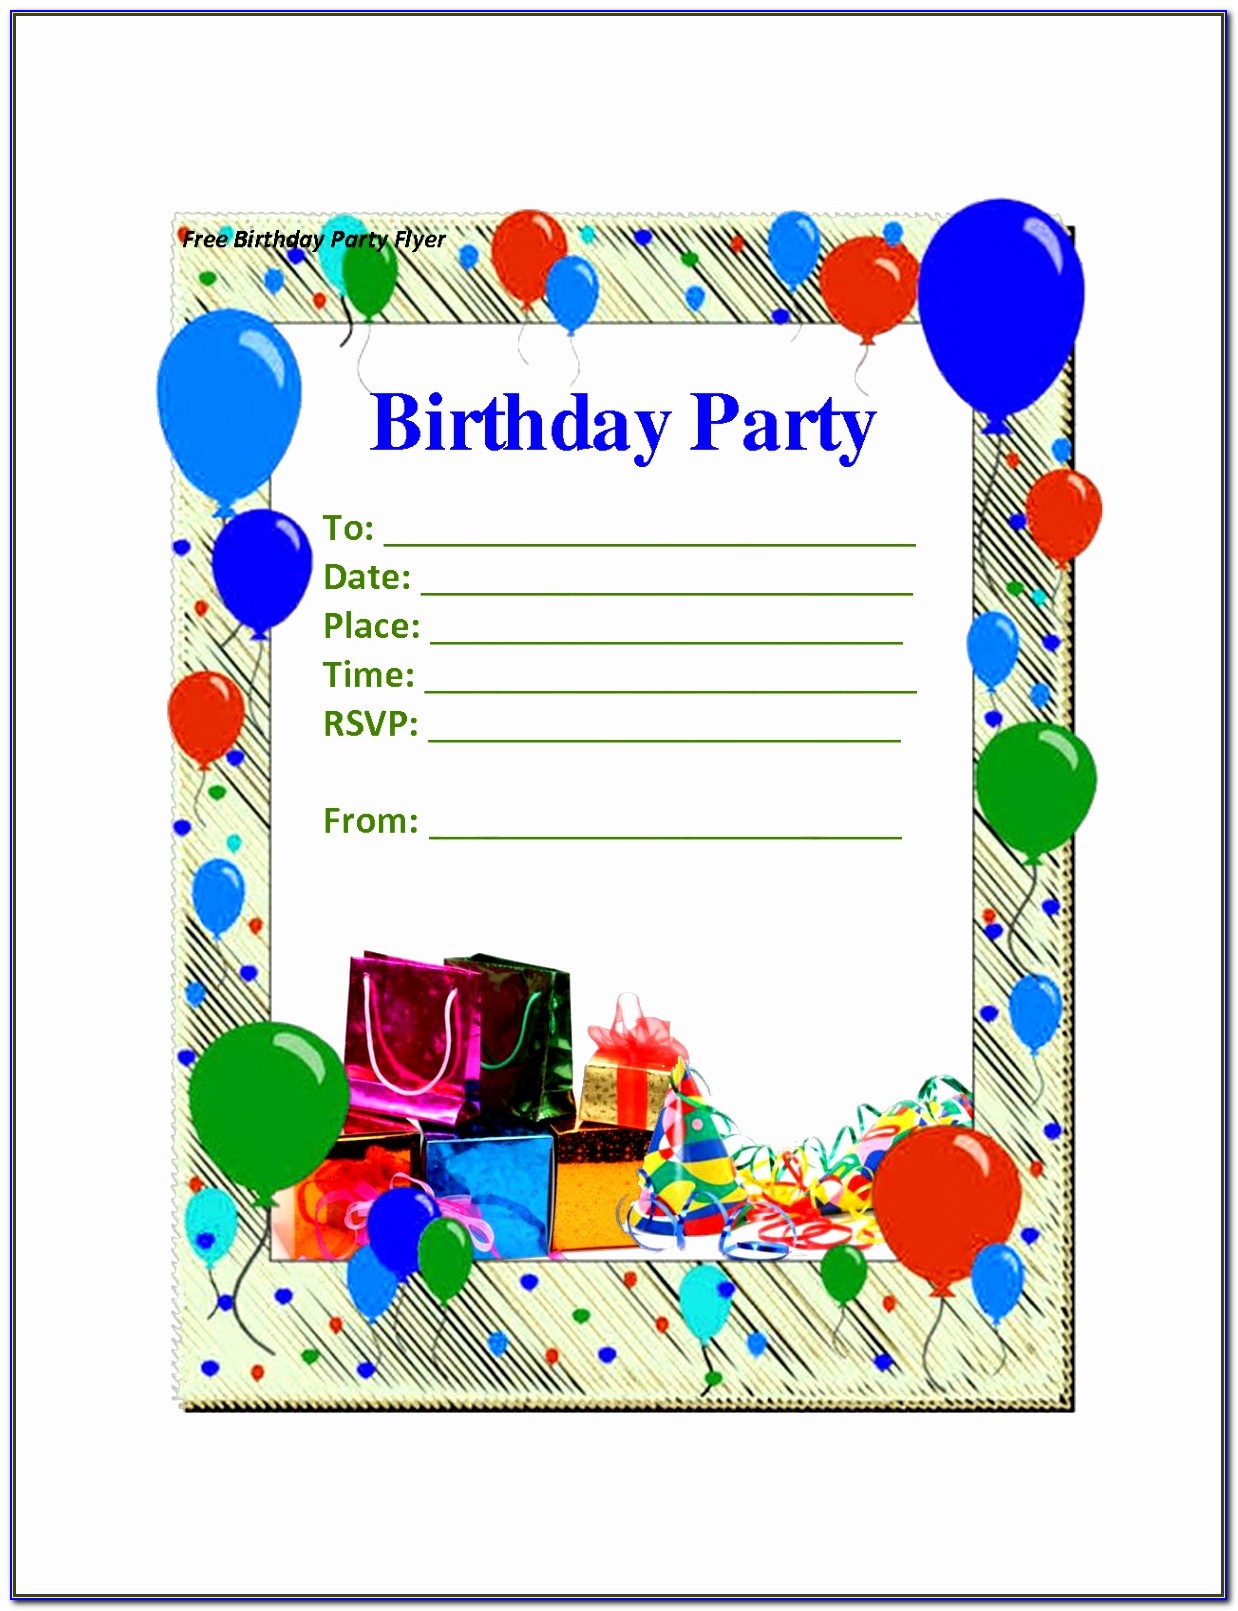 birthday-invitation-card-format-in-ms-word